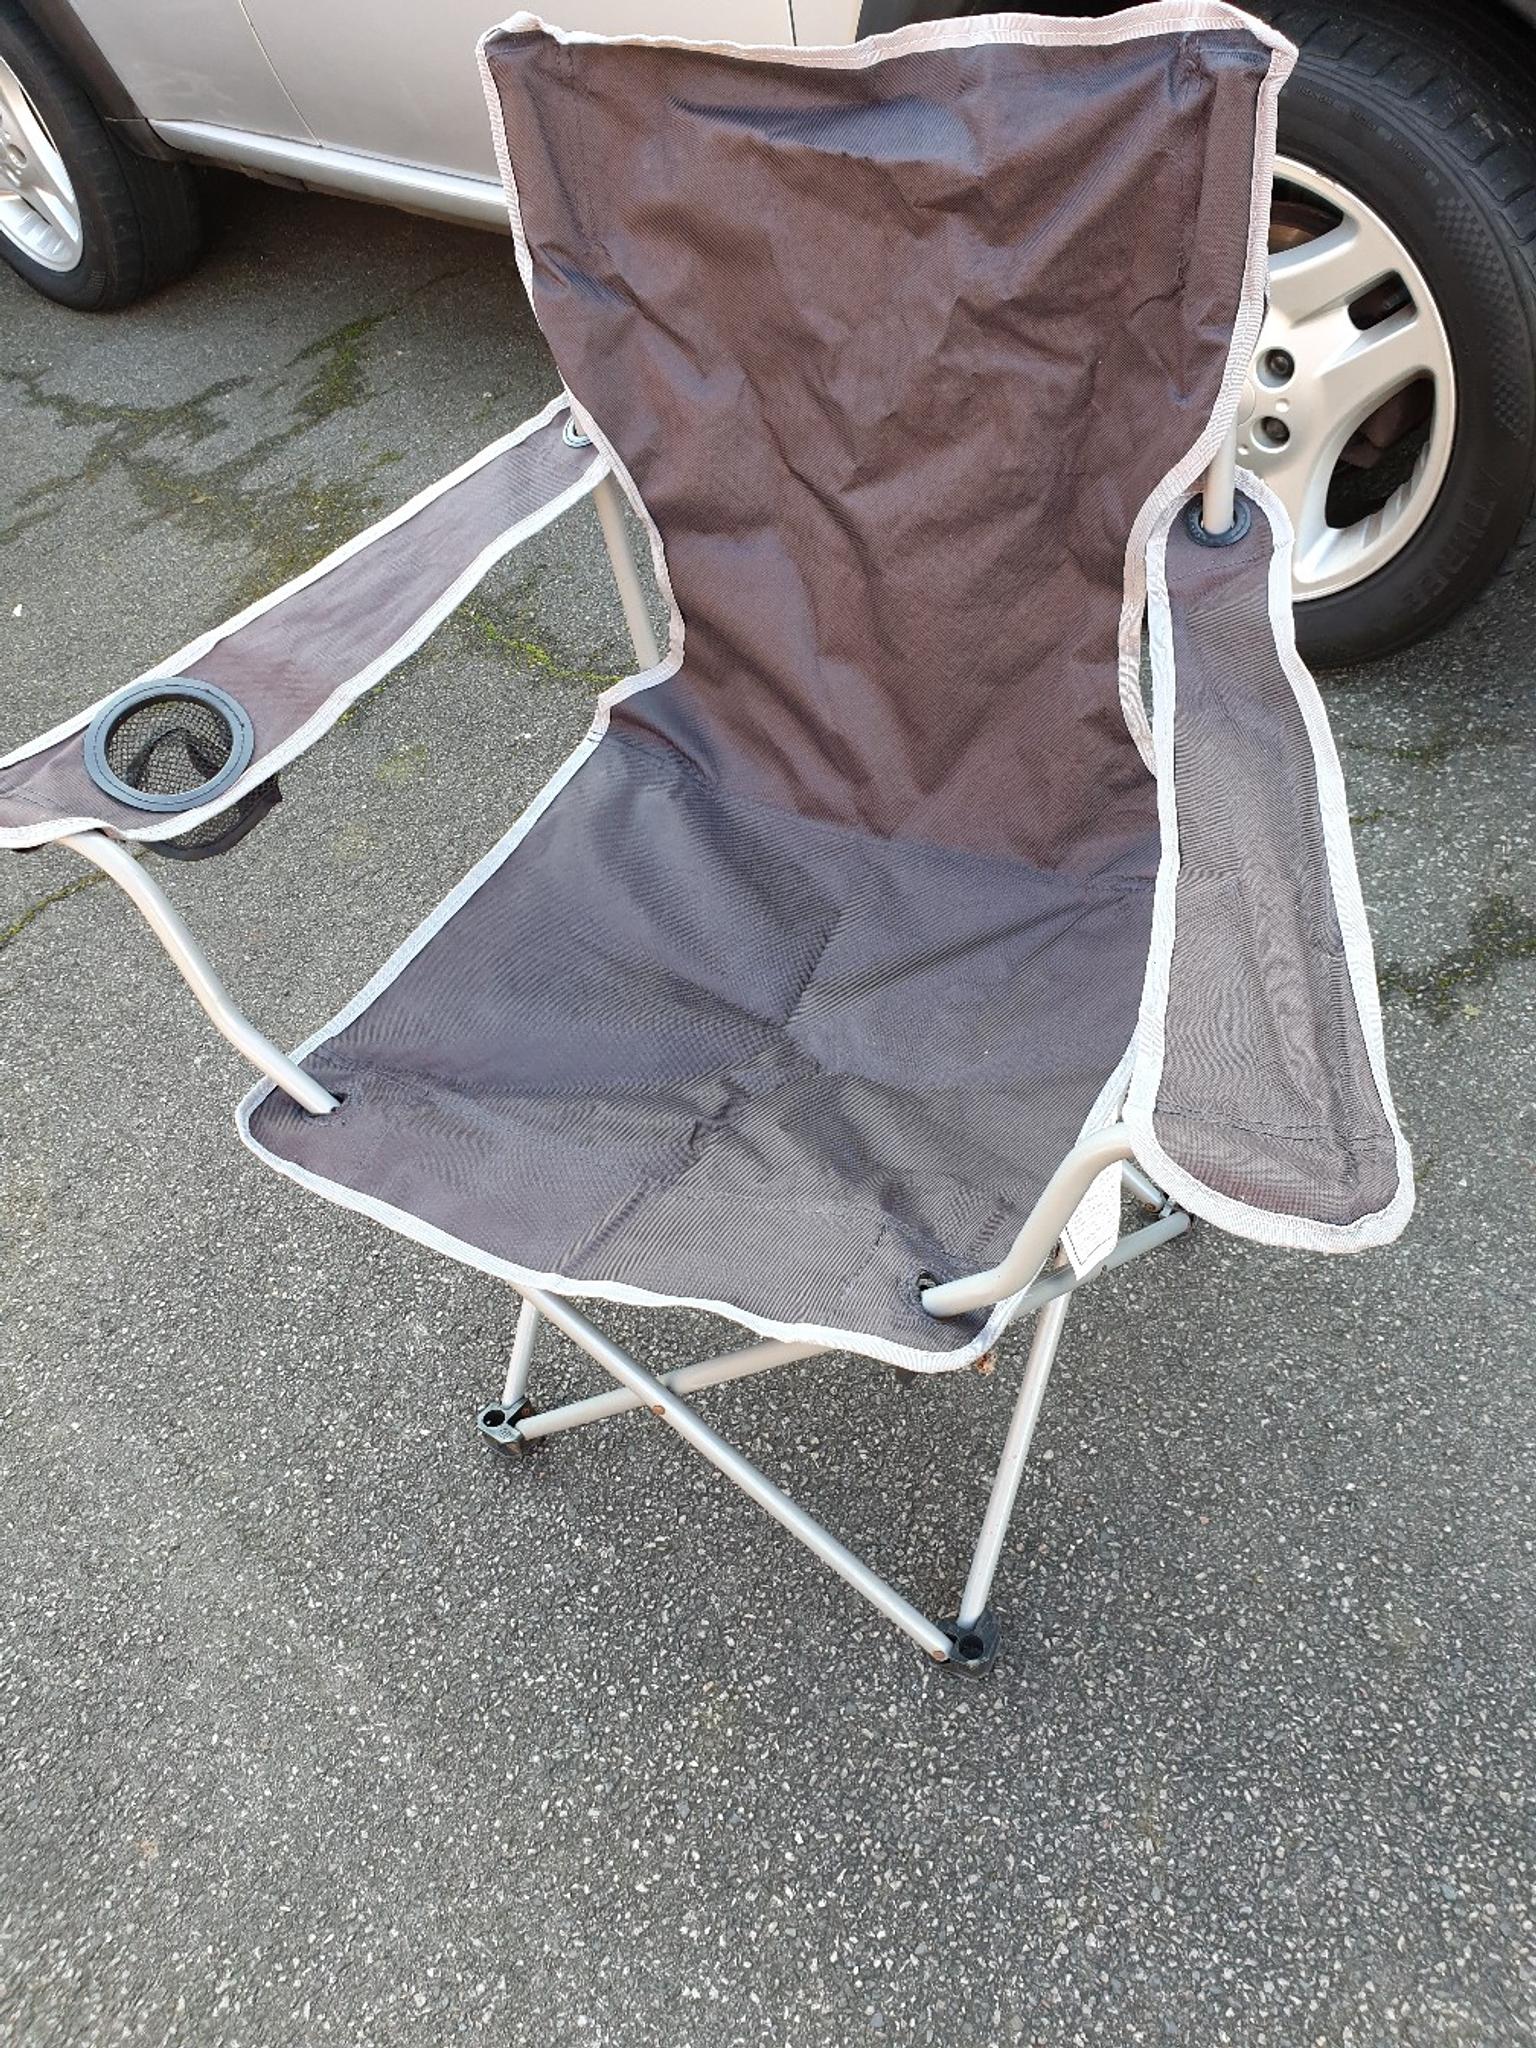 asda double camping chair